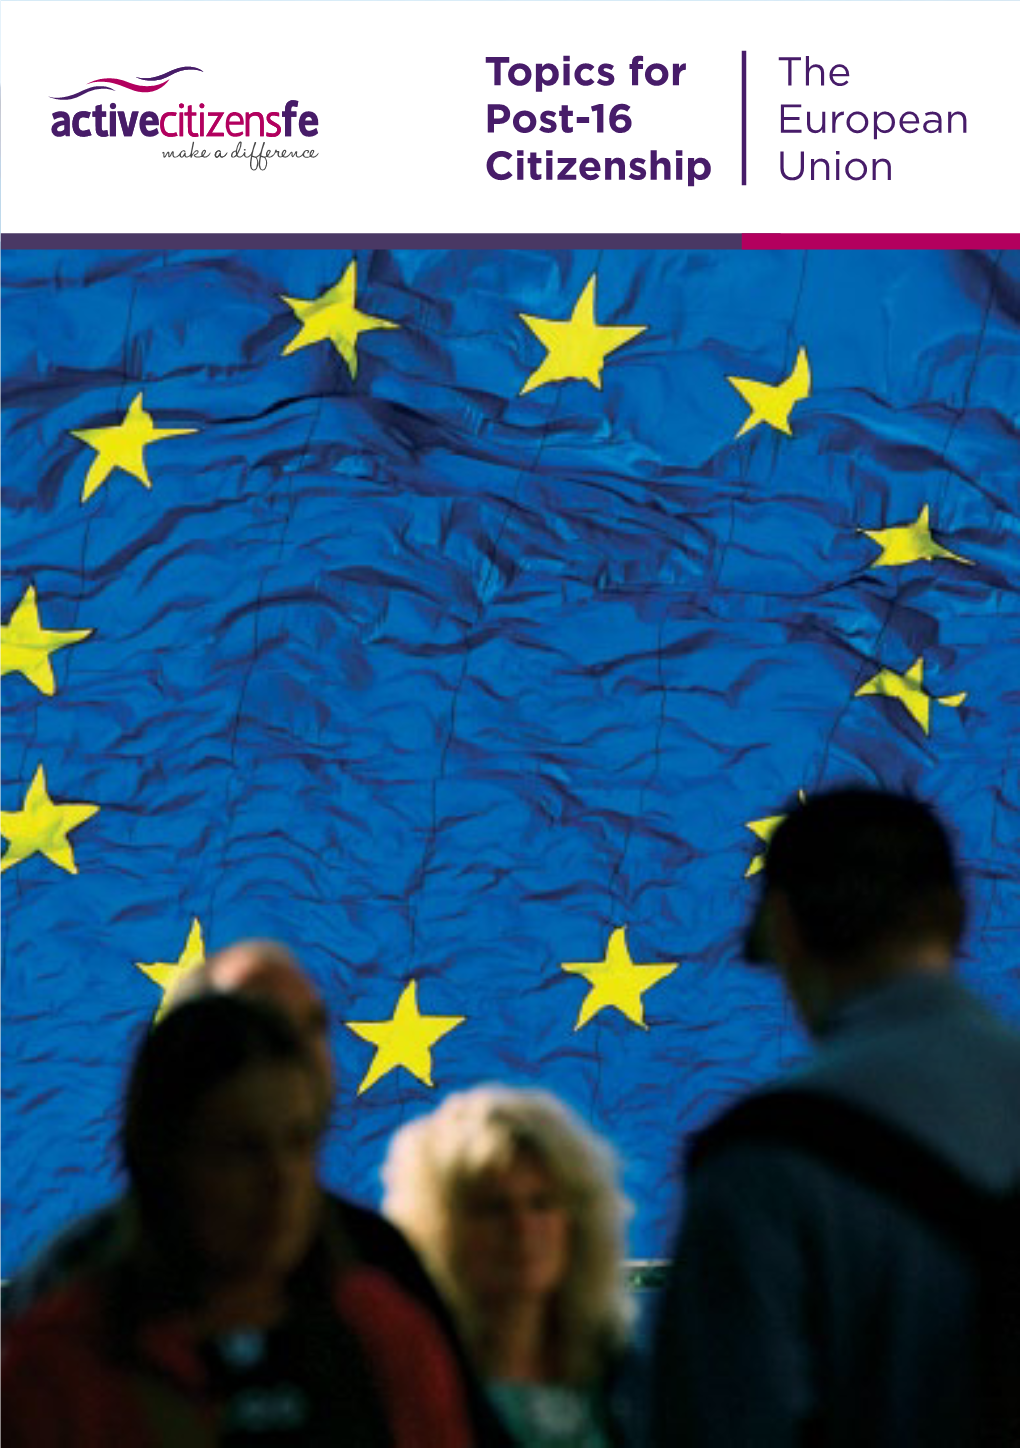 Topics for Post-16 Citizenship the European Union